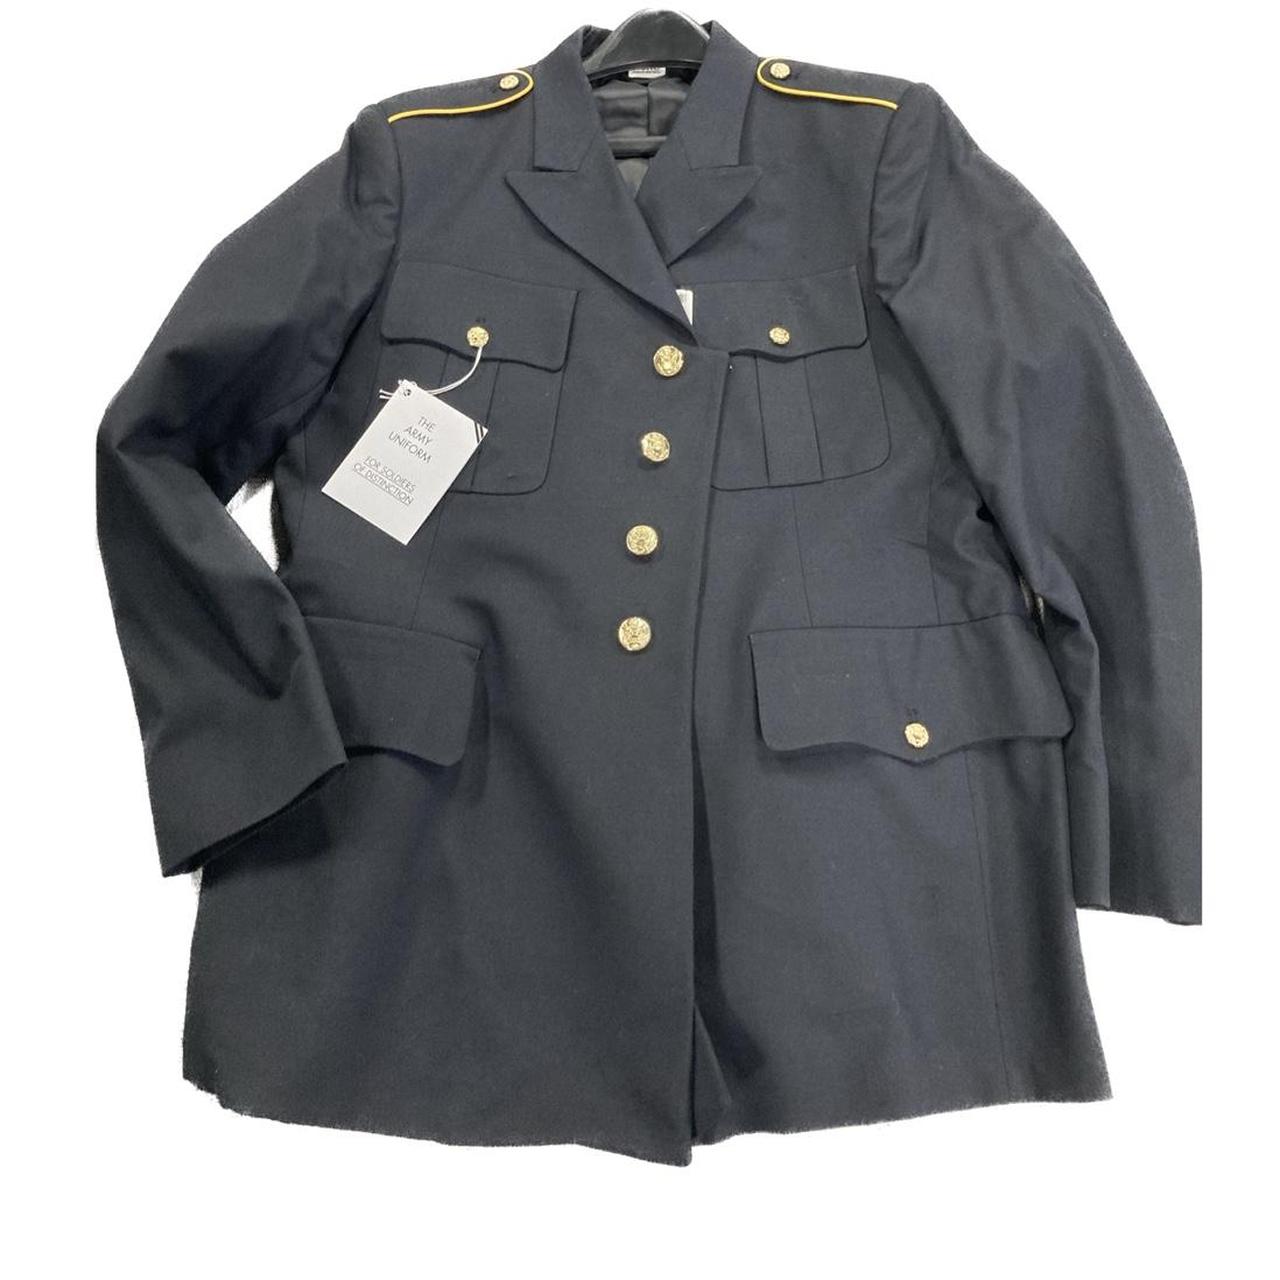 U.S. Army Jacket Unisex, 46 Long, Black New... - Depop